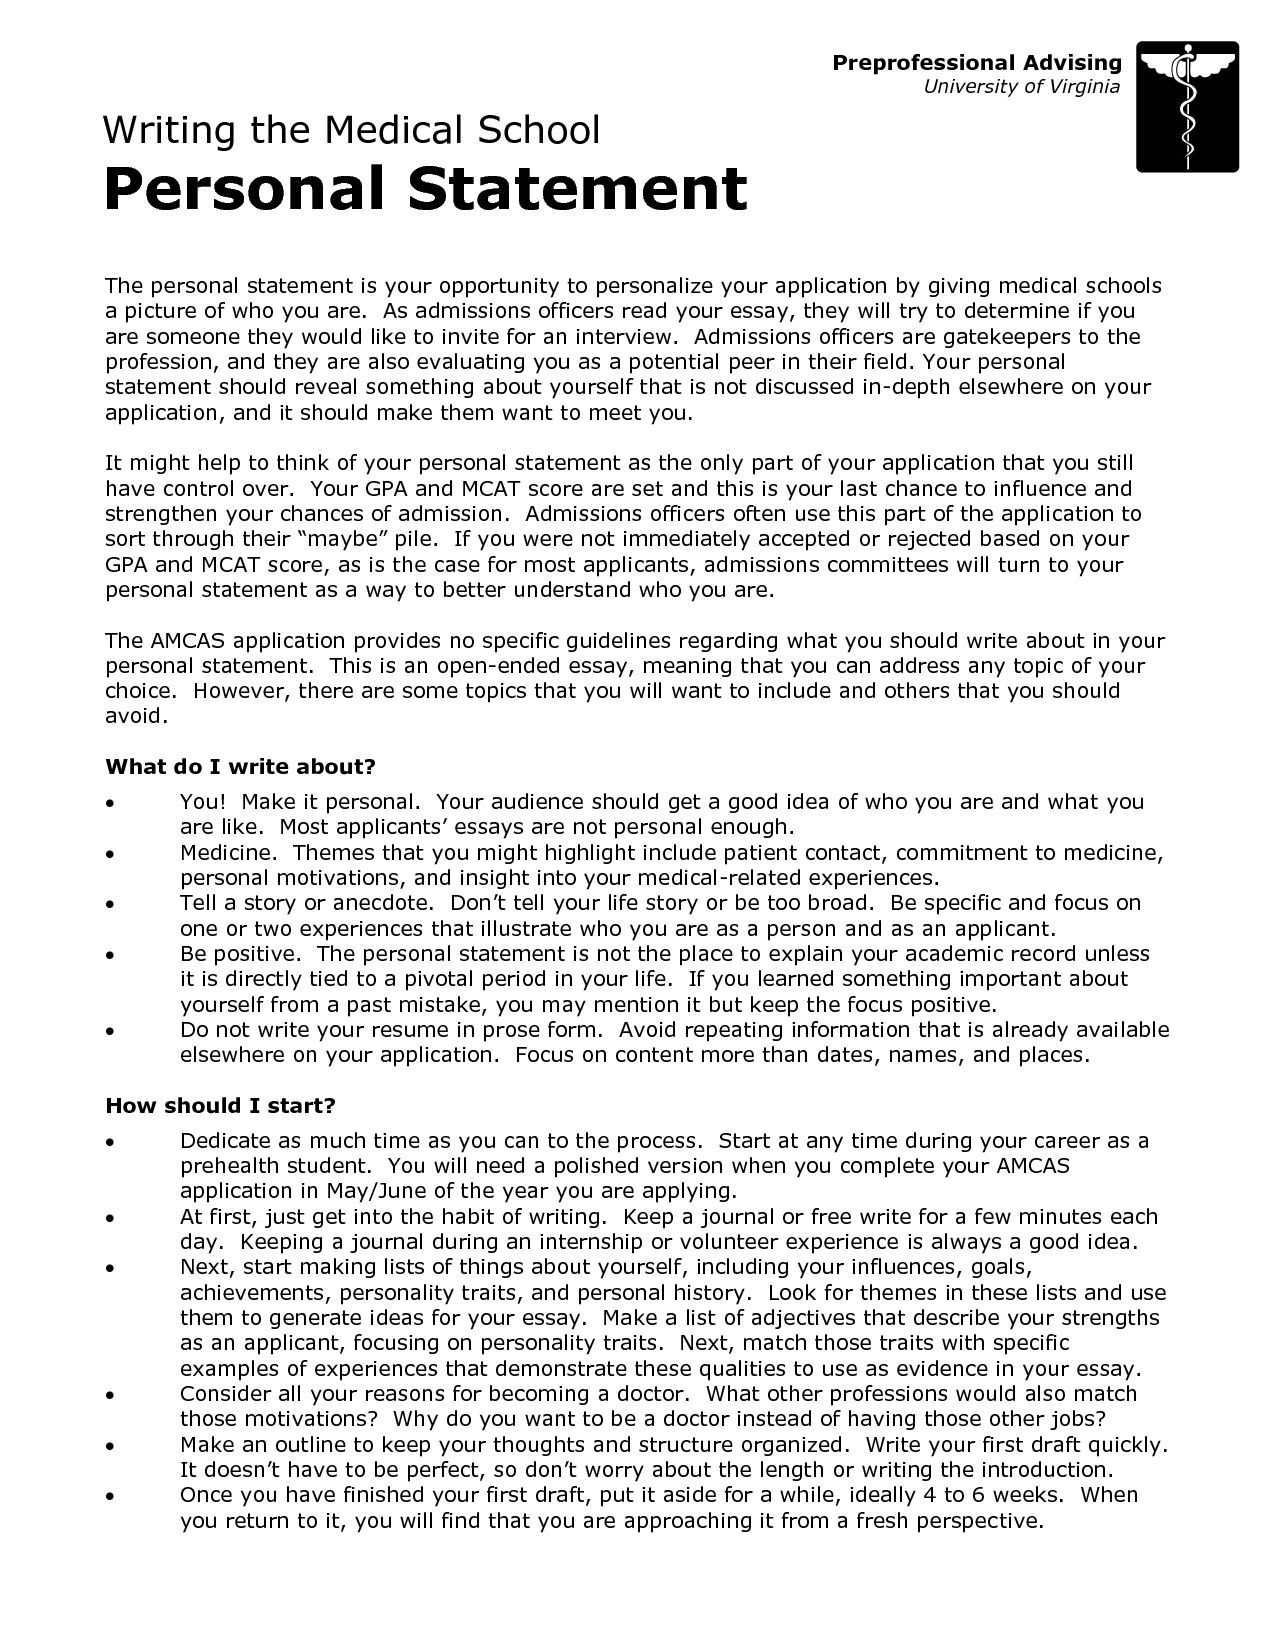 College admission essay online vs personal statement